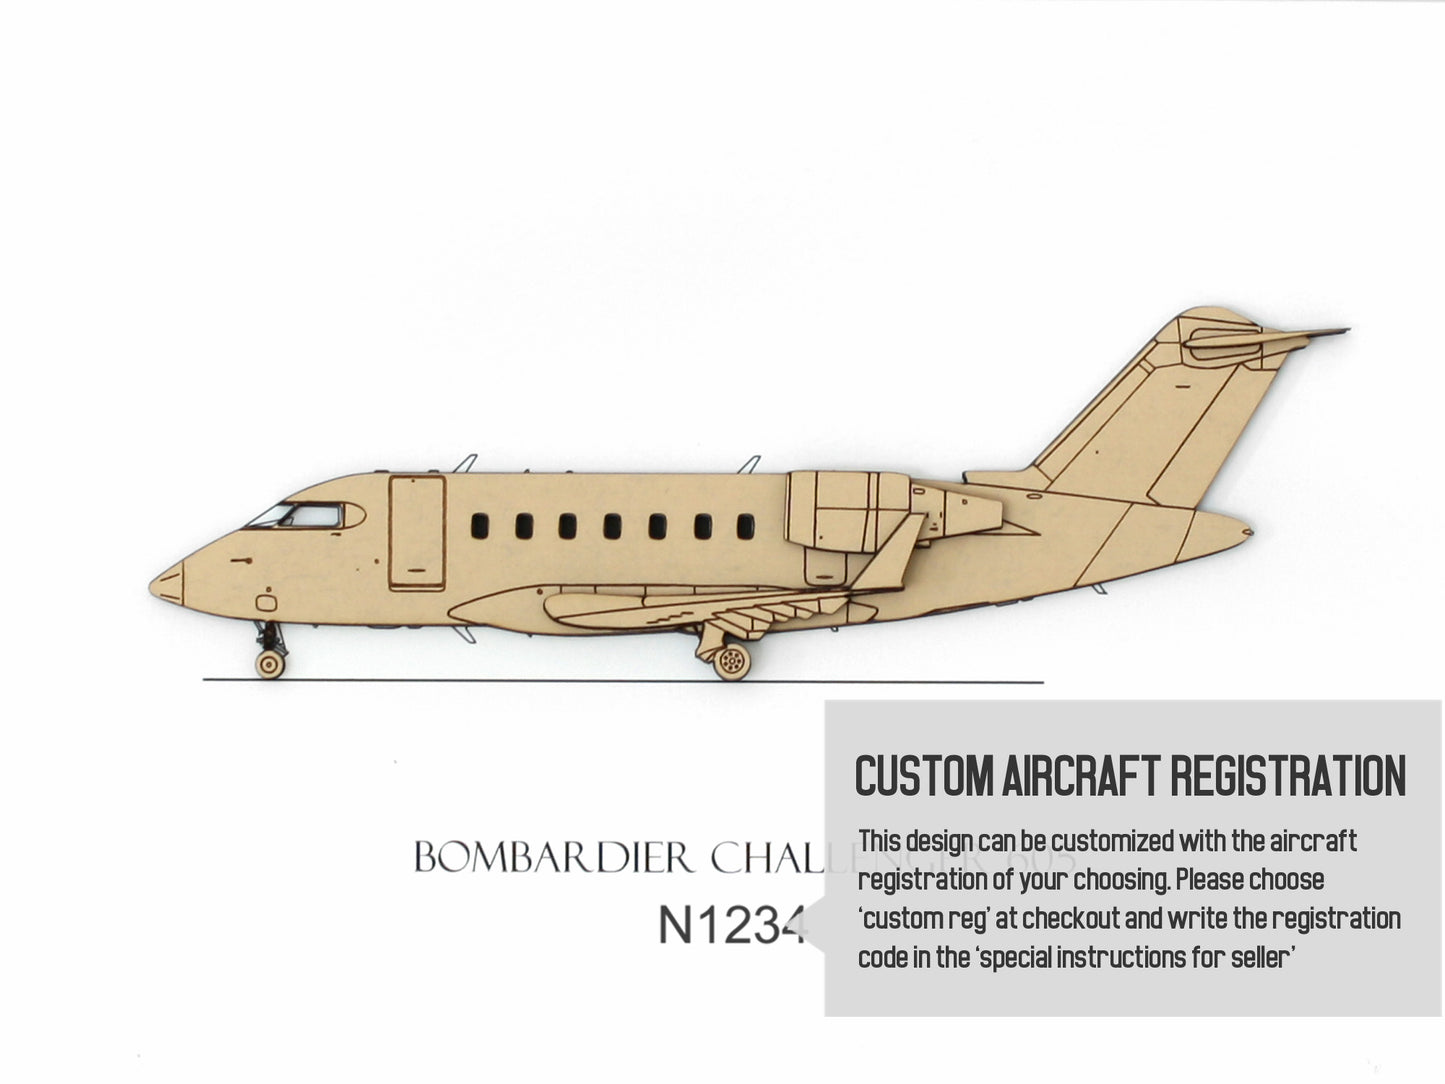 Bombardier Challenger 605 custom aviation art